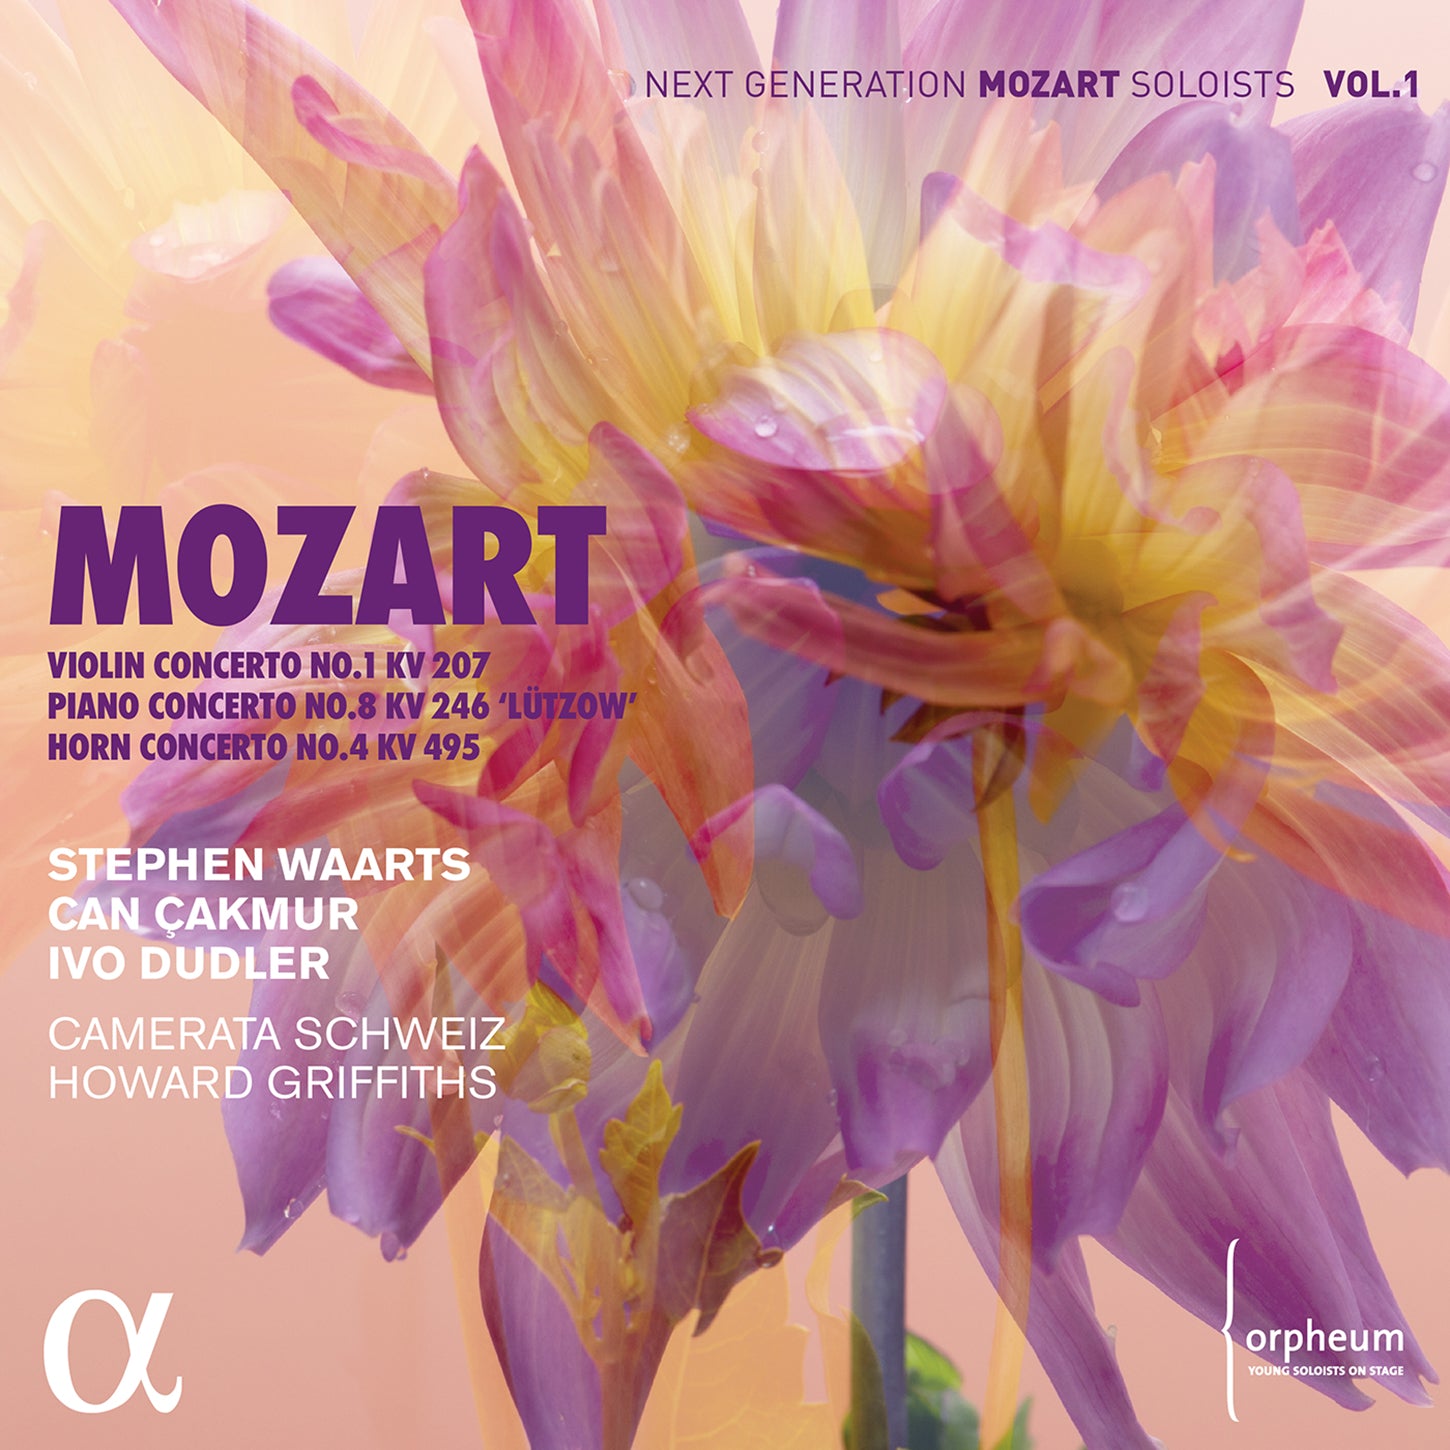 Mozart: Violin Concerto No. 1, KV. 207; Piano Concerto No. 8, KV. 246 "Lutzow"; Horn Concerto No. 4, KV. 495 / Waarts, Çakmur, Dudler, Griffiths, Camerata Schweiz